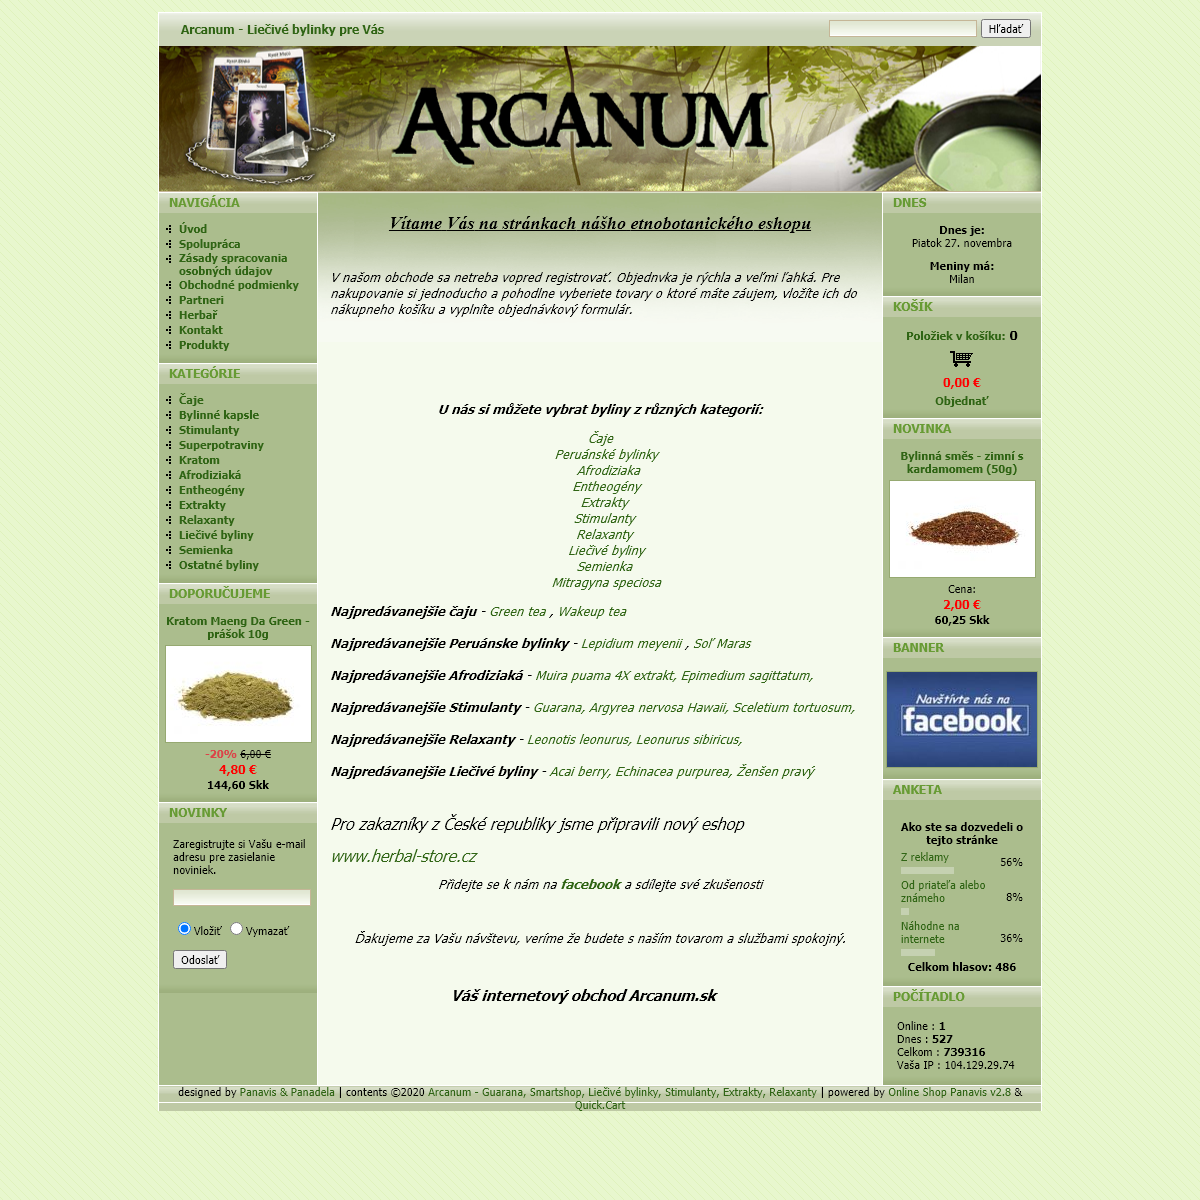 A complete backup of arcanum.sk